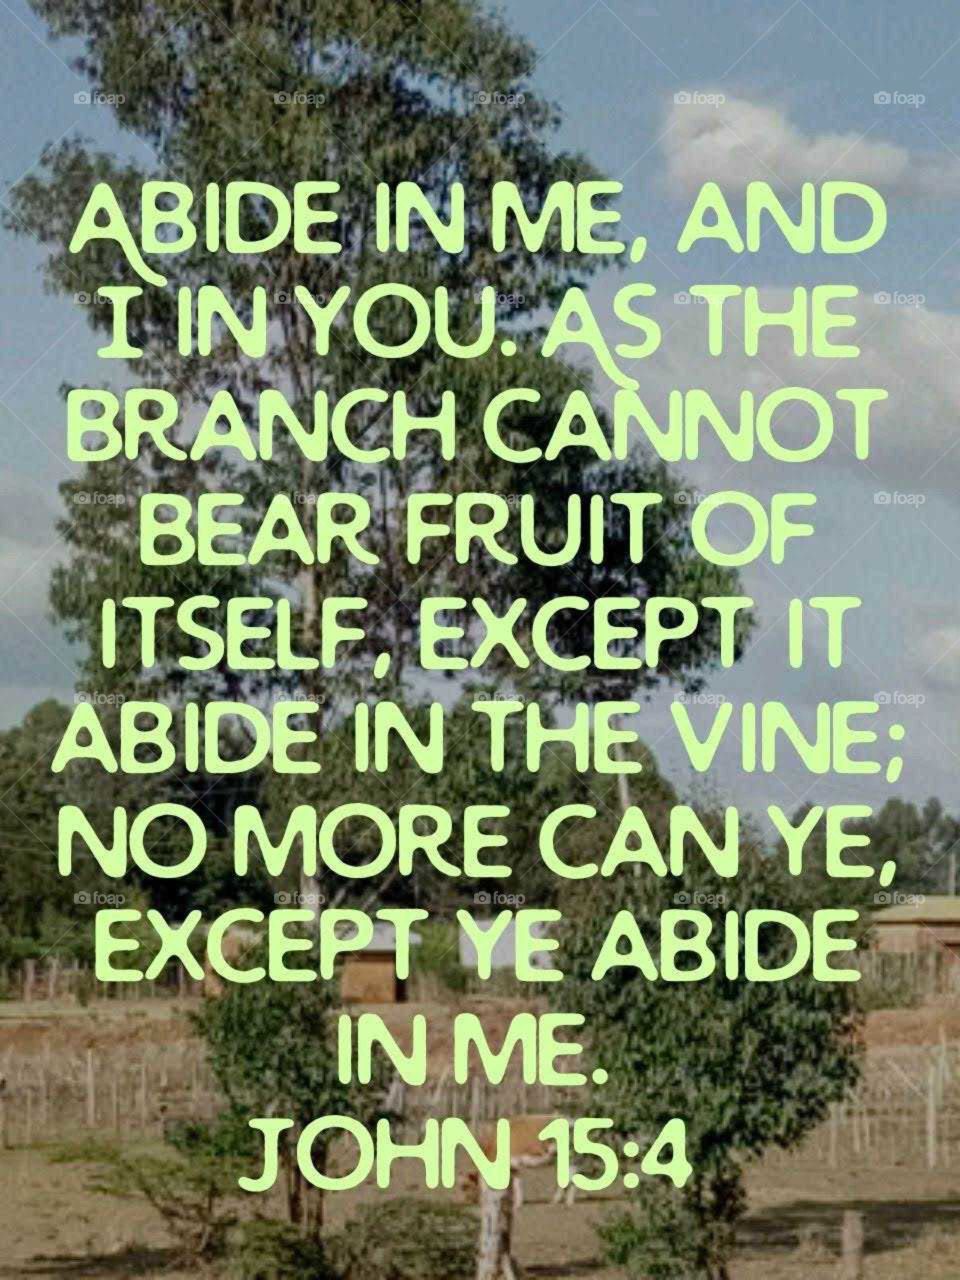 let's abide in Christ...